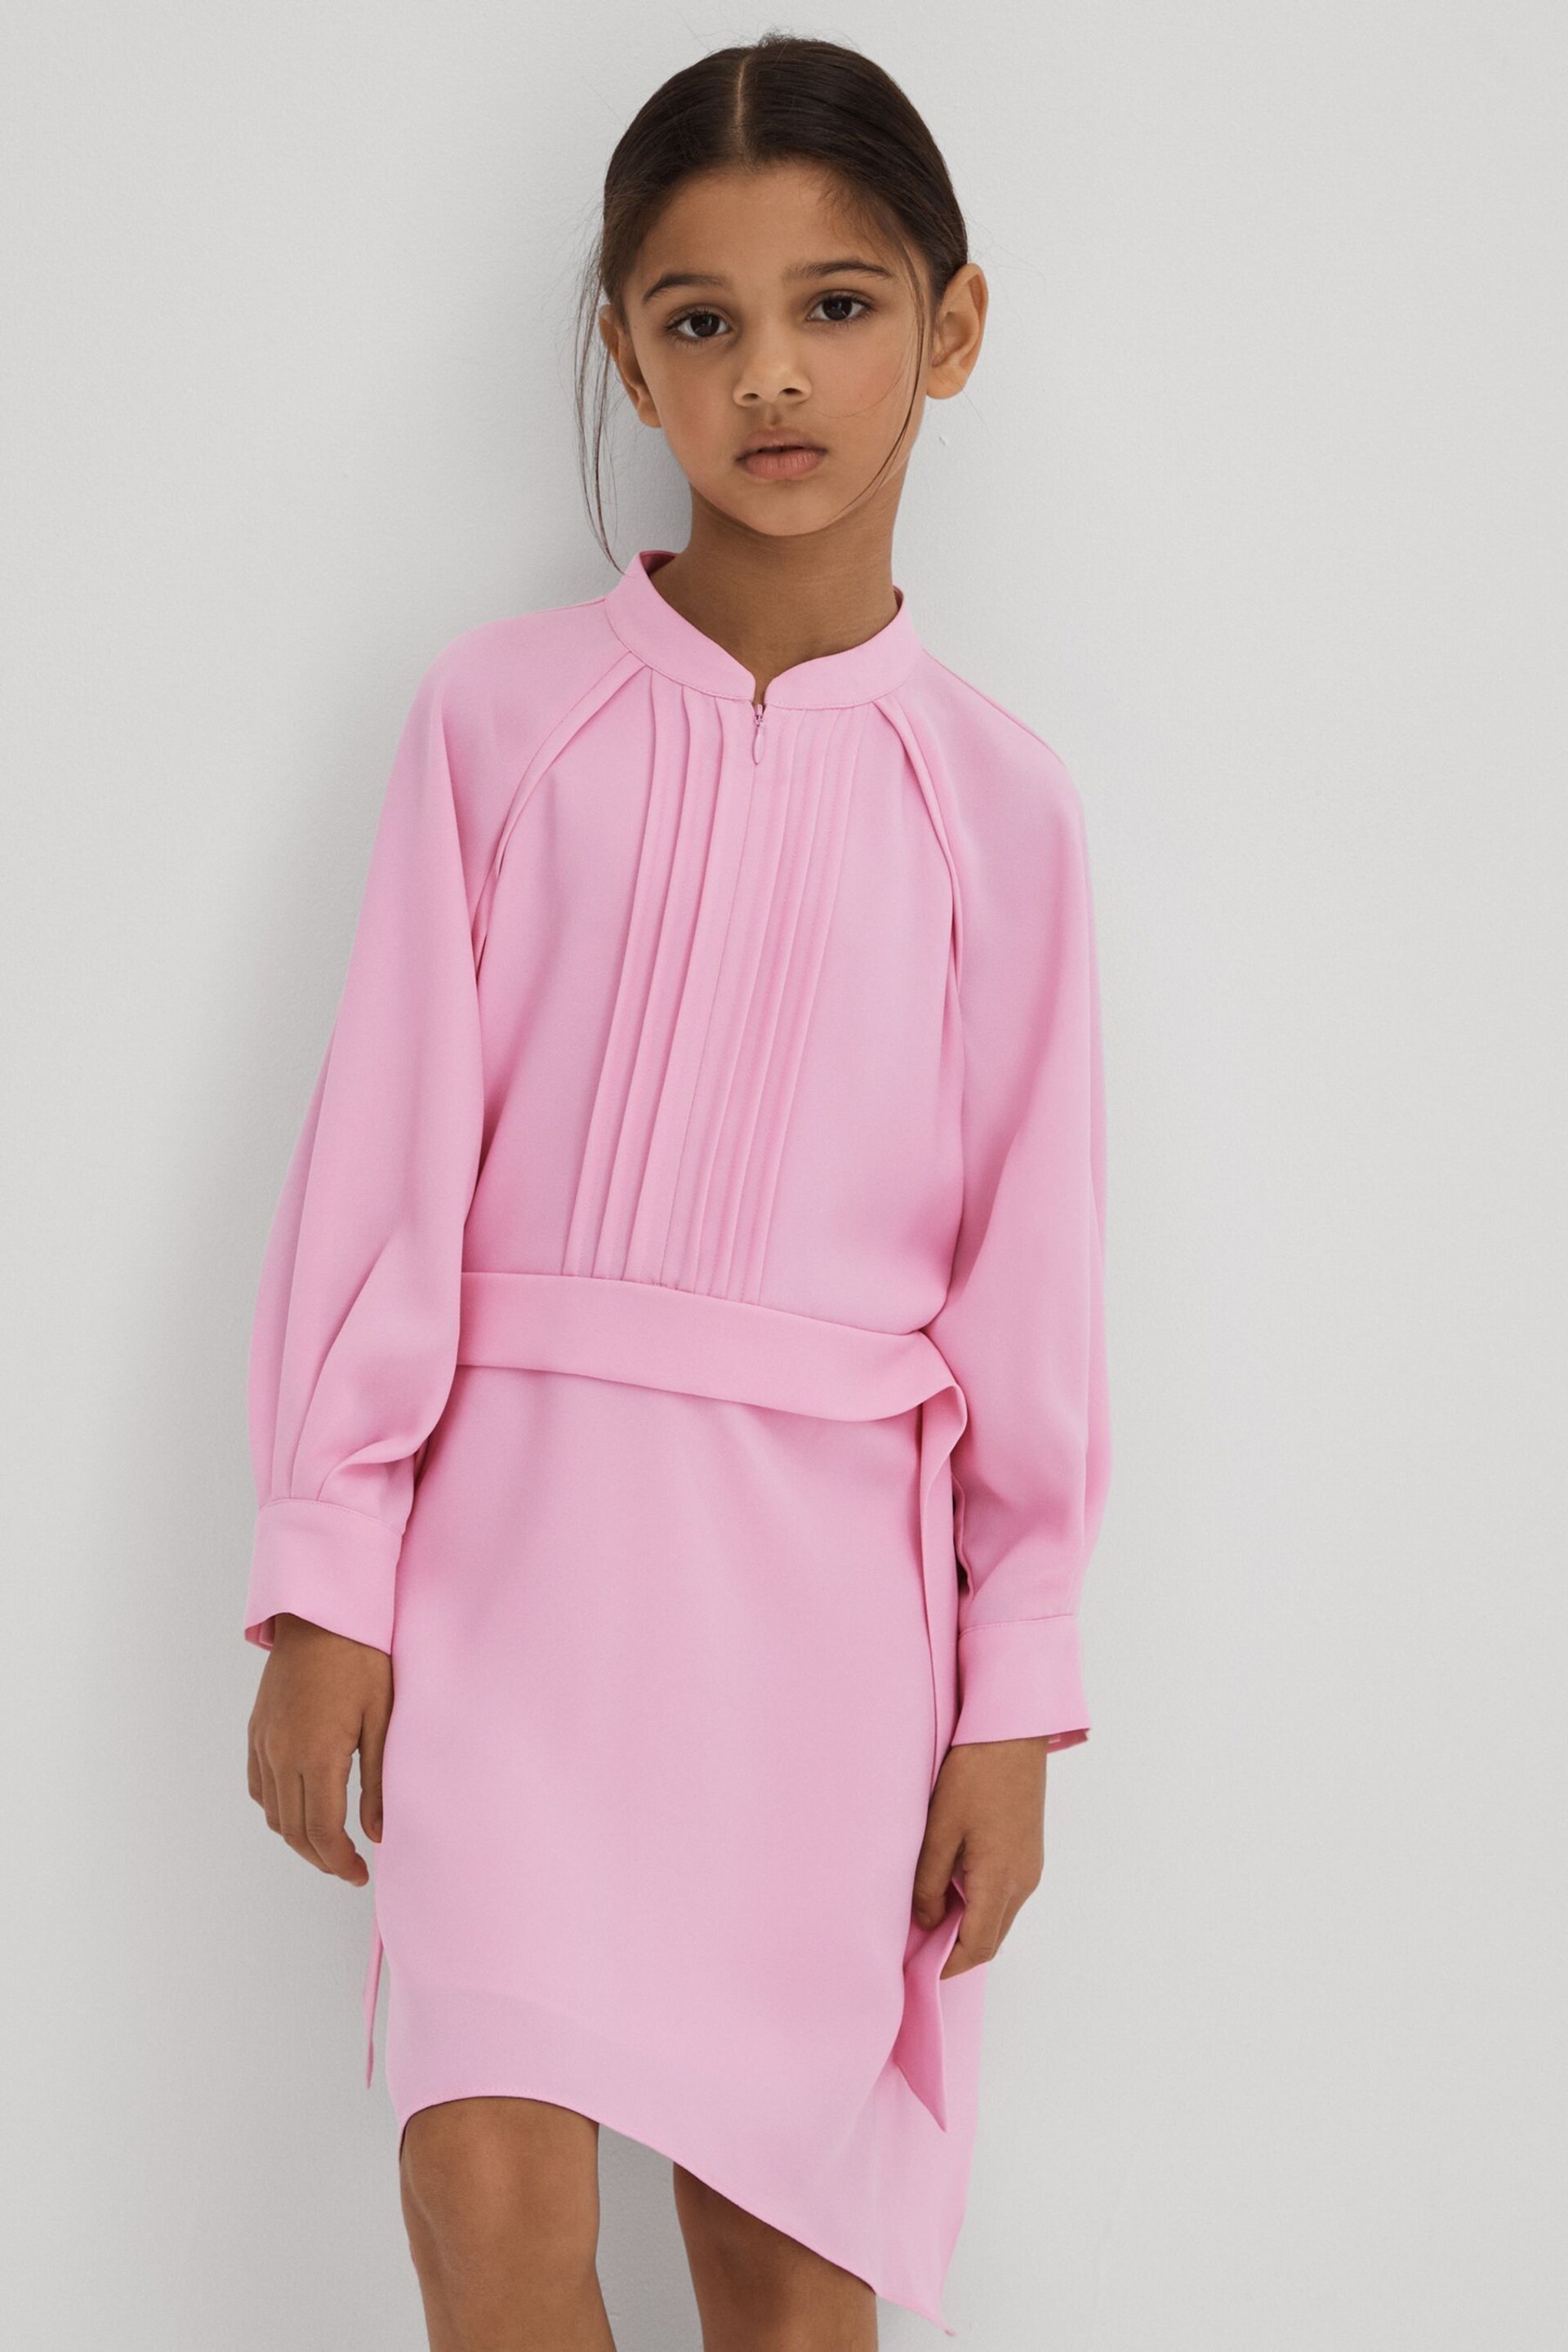 Reiss Pink Erica Junior Zip Front Asymmetric Dress - Image 1 of 6